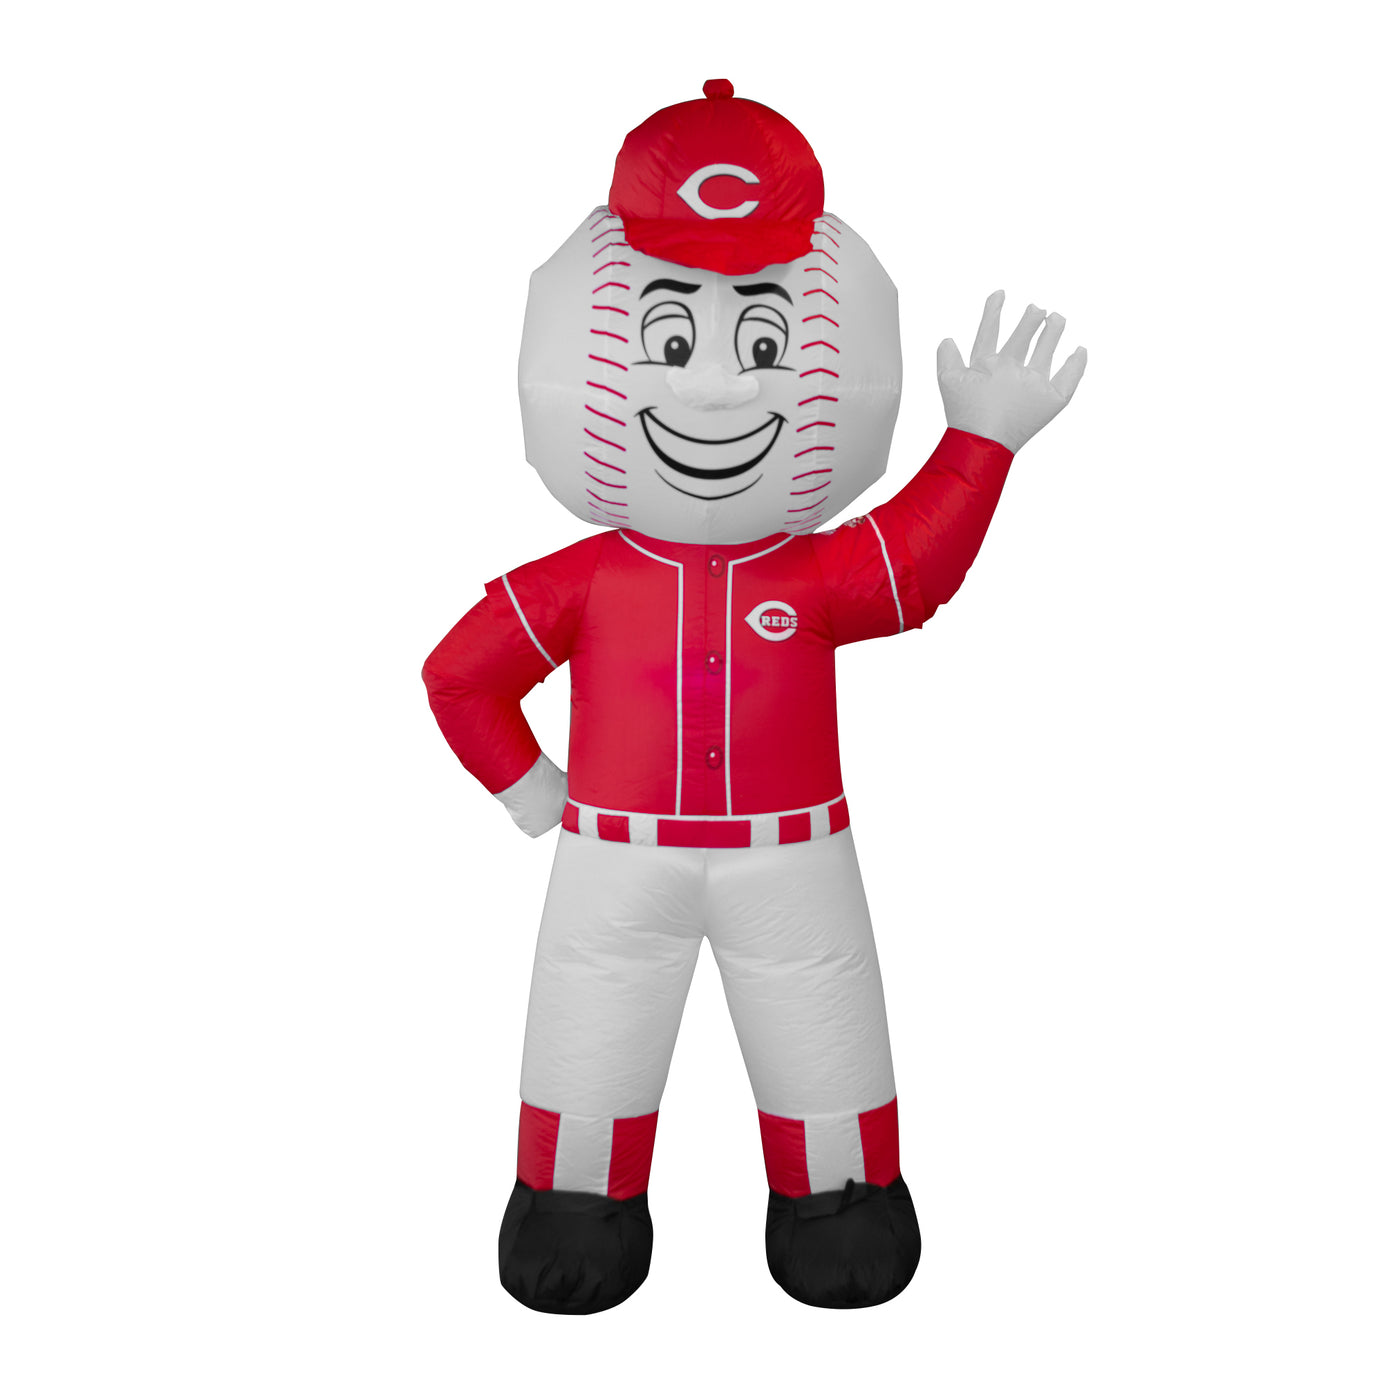 Cincinnati Reds Inflatable Mascot